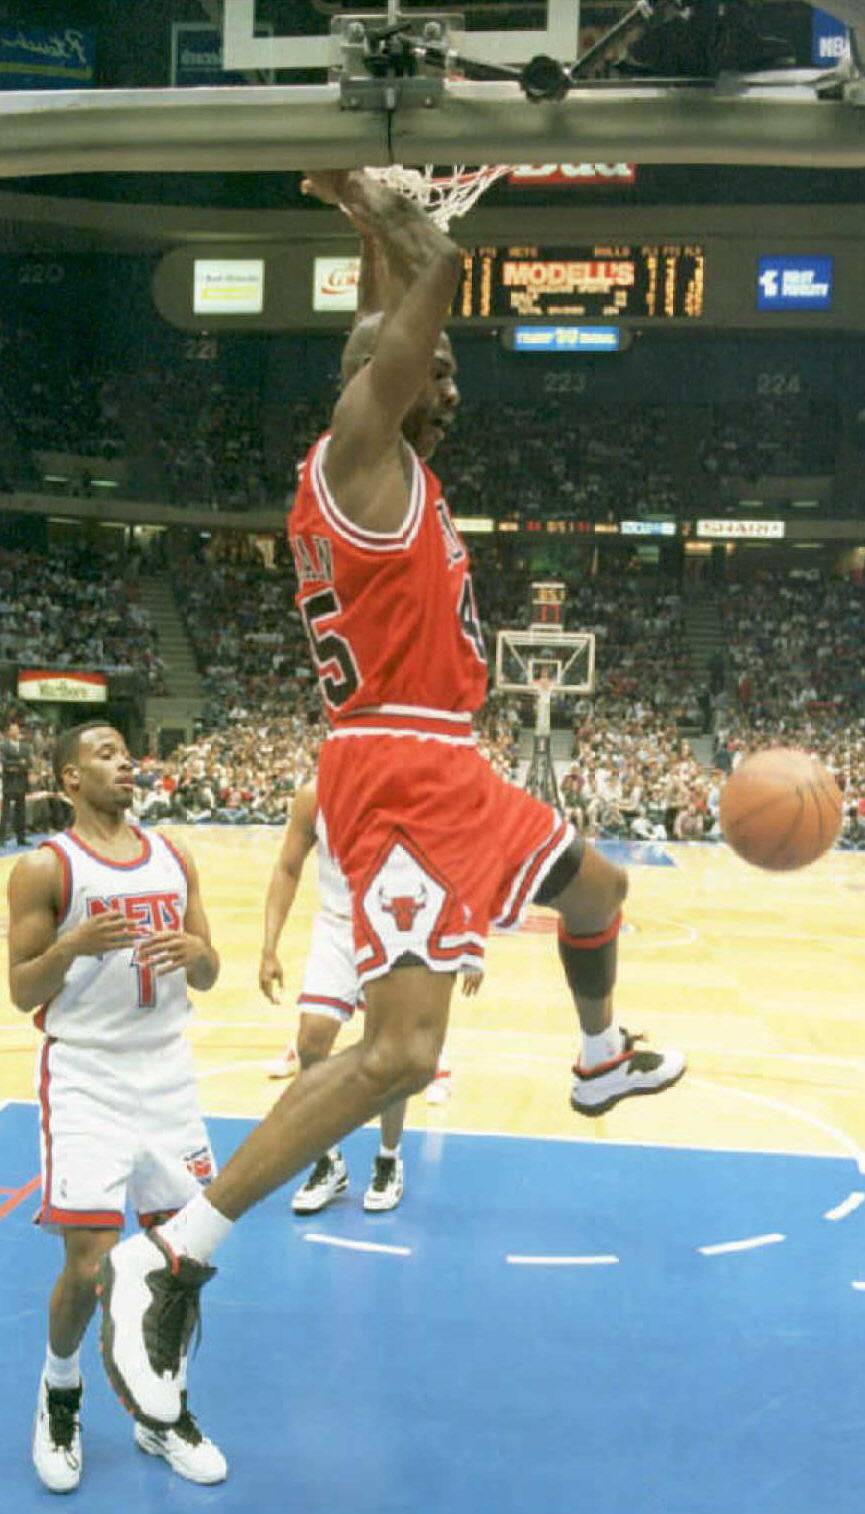 Michael Jordan #45 Jersey signature + career achievements